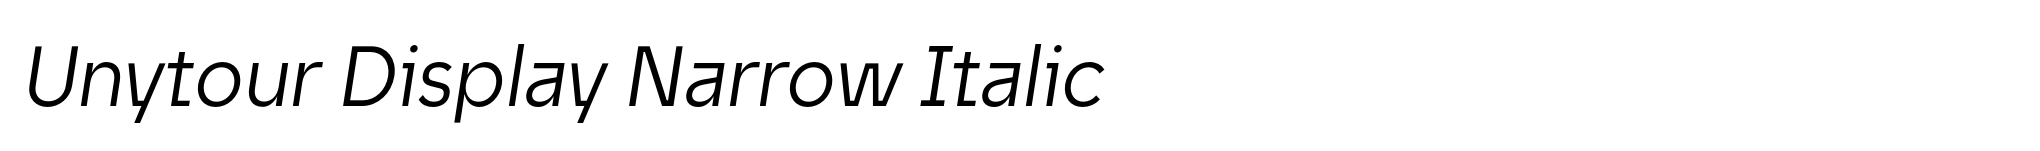 Unytour Display Narrow Italic image